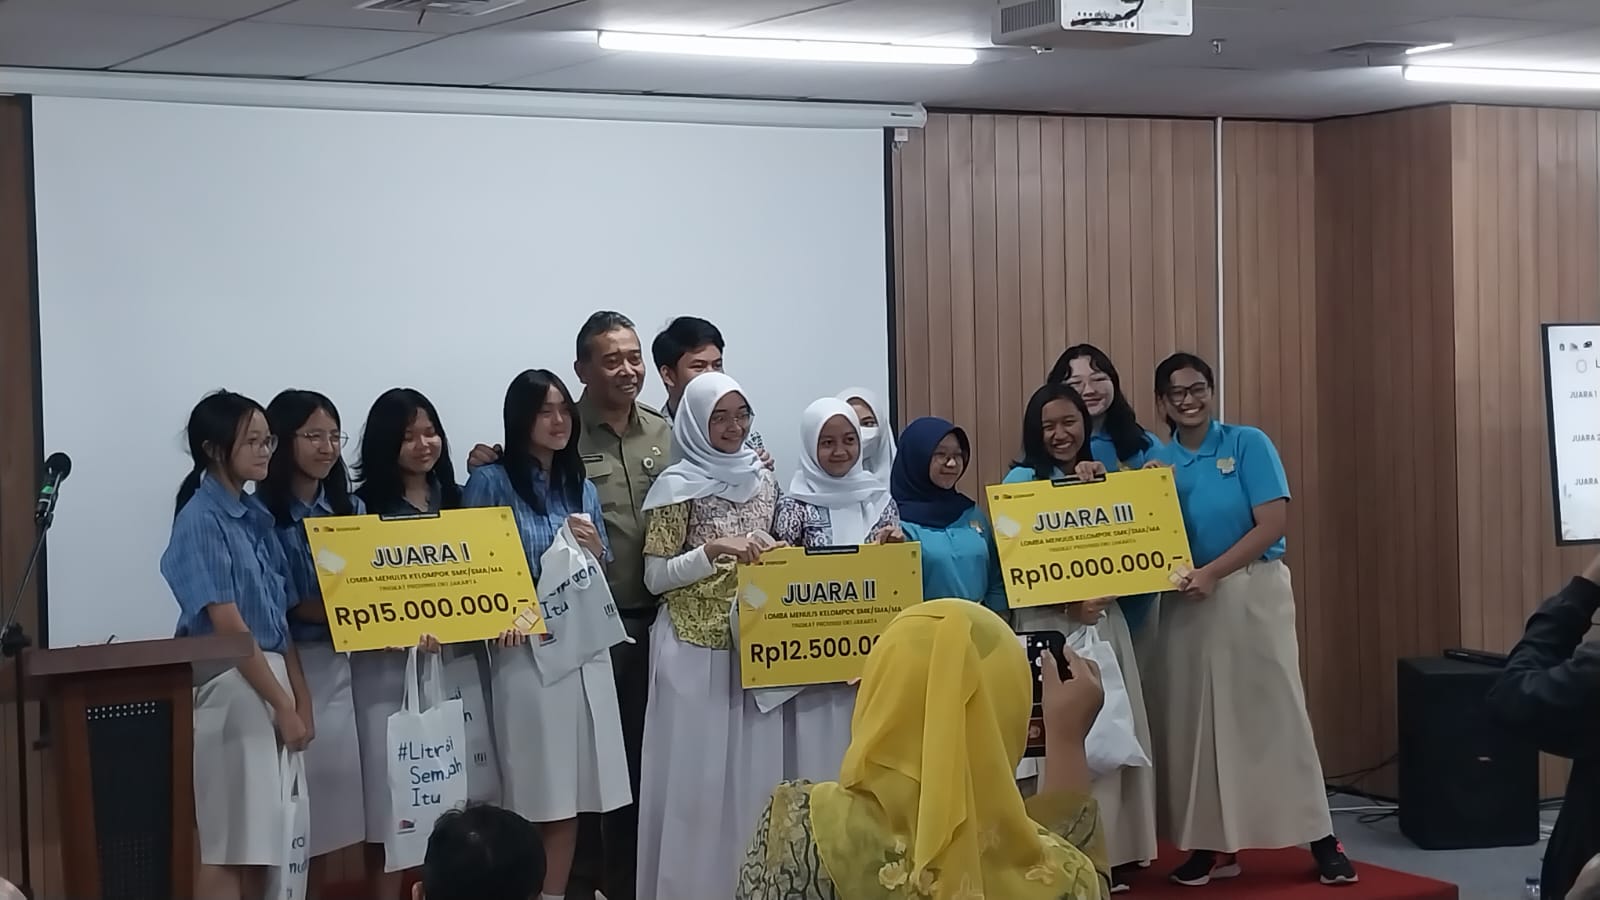 Pengumuman Lomba Hari Anak Jakarta Membaca Dan Lomba Menulis Tingkat Provinsi DKI Jakarta